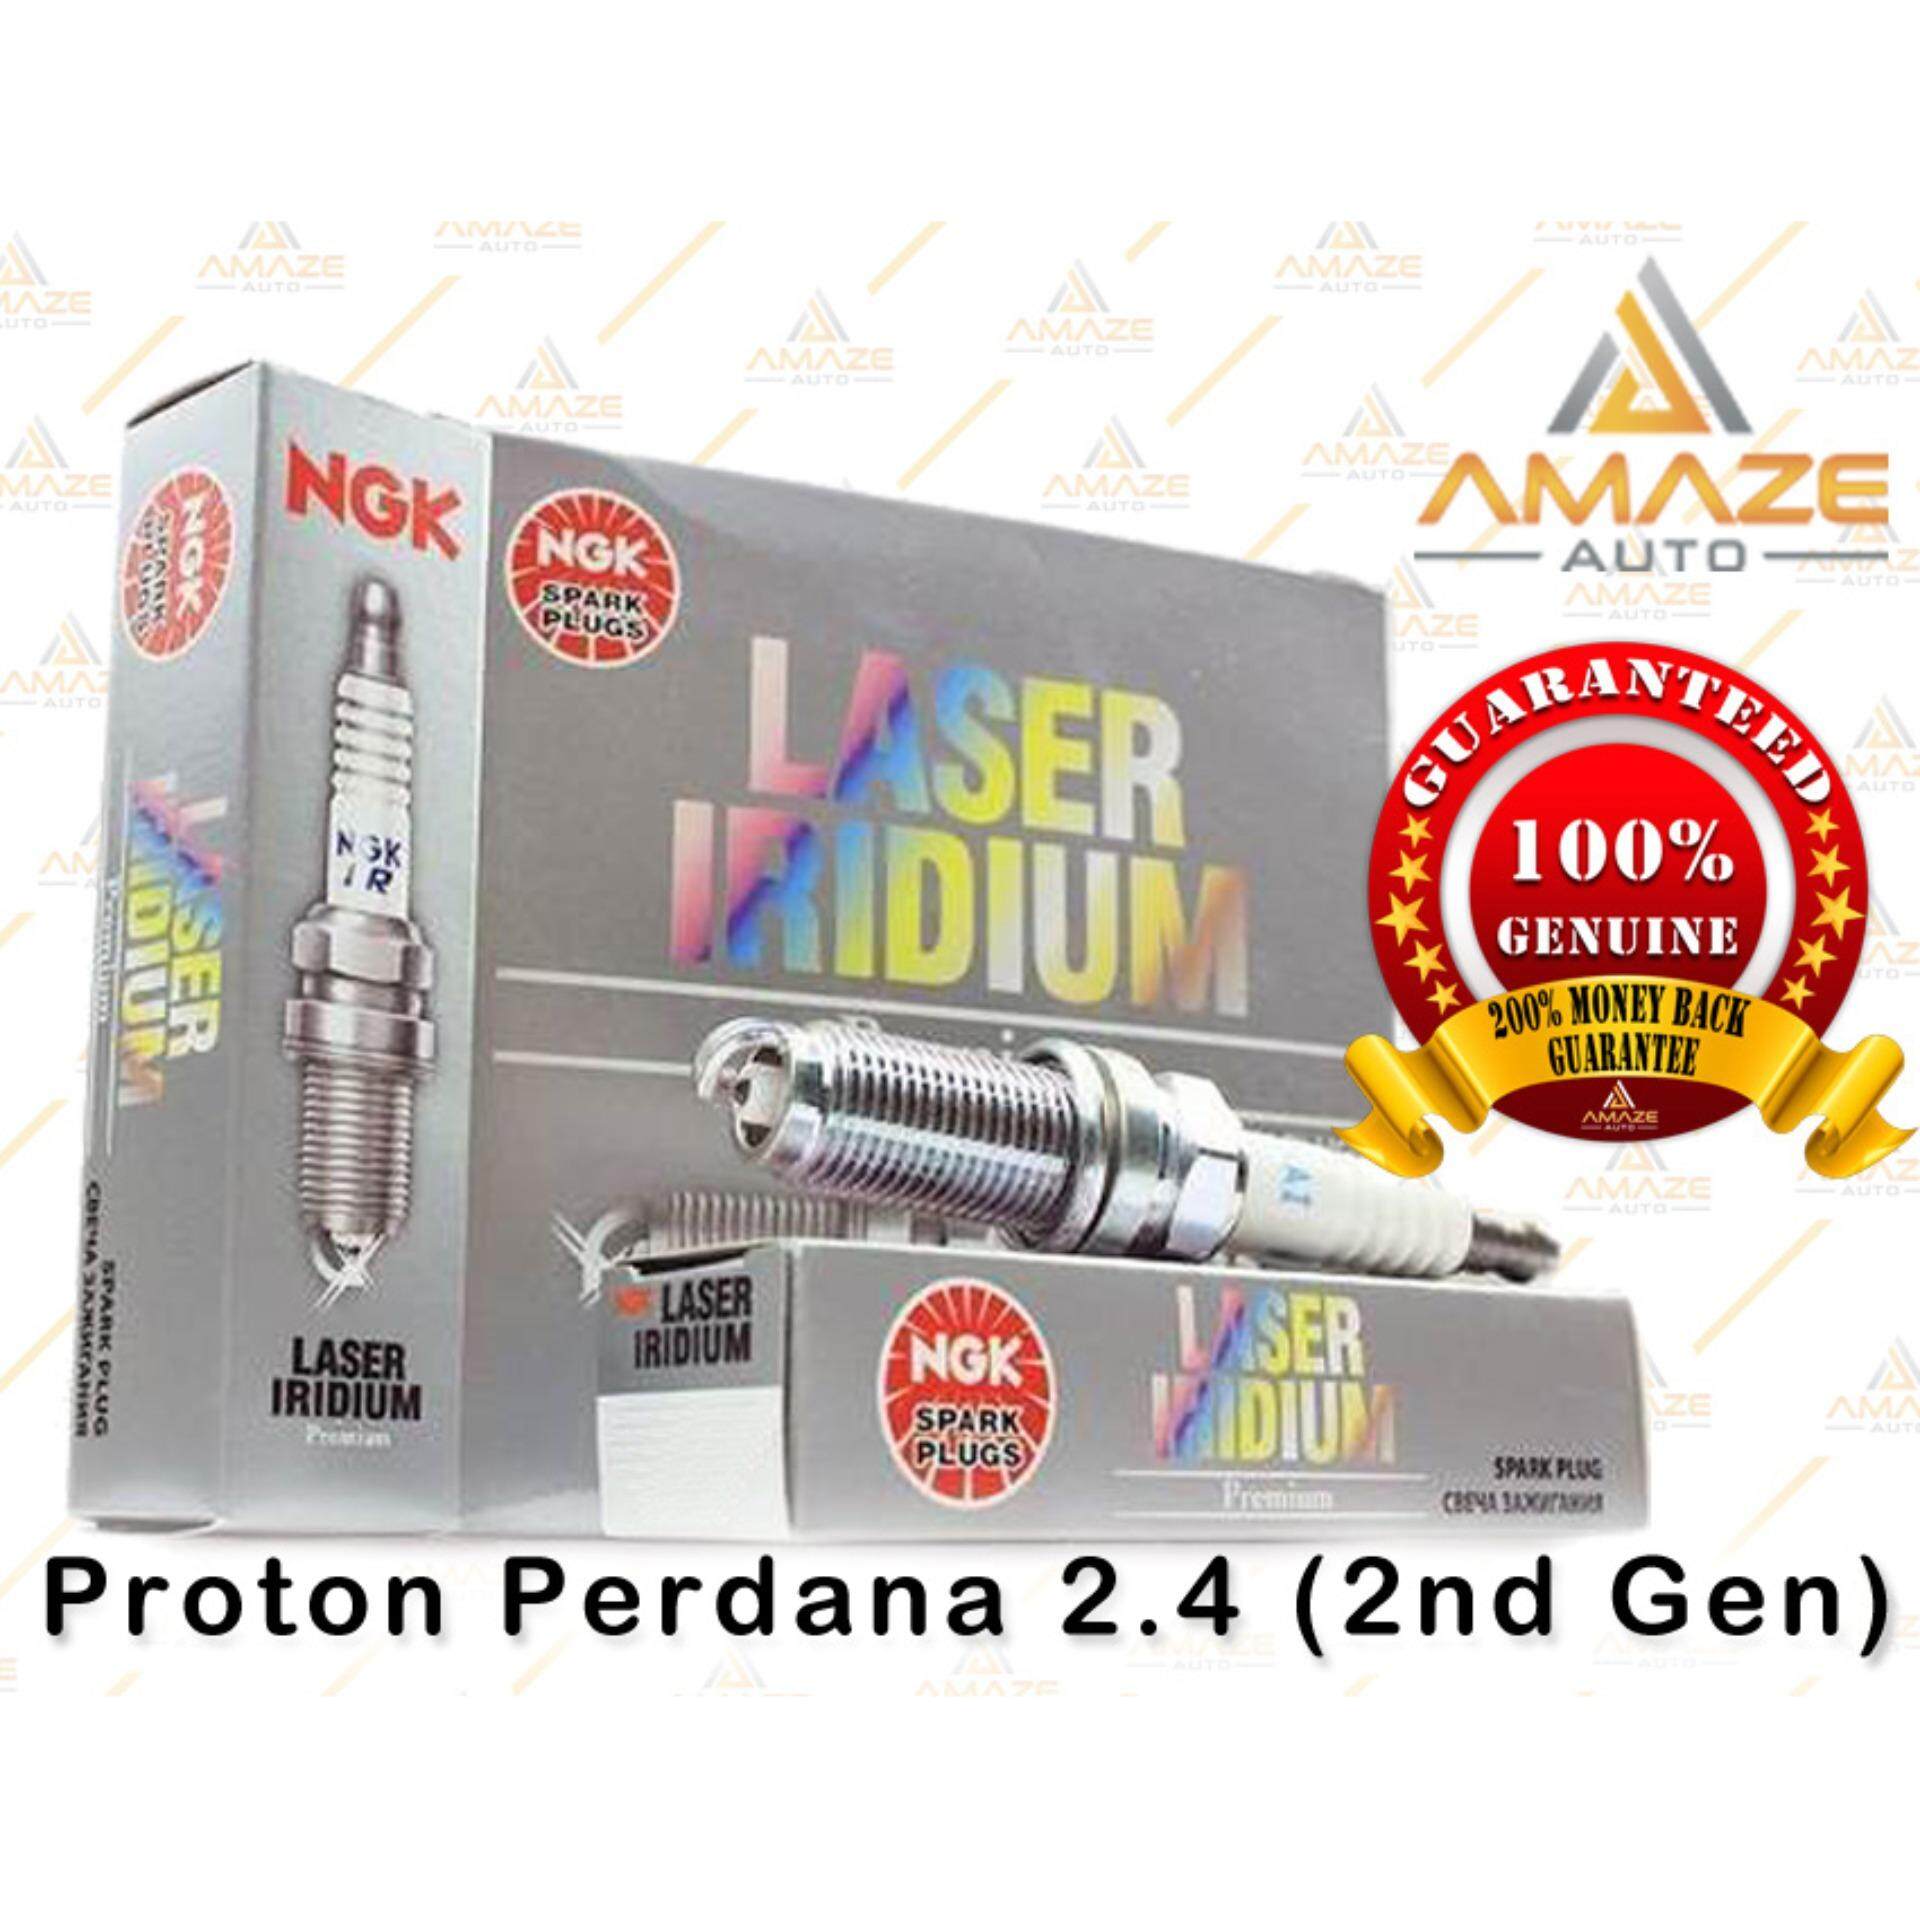 NGK Laser Iridium Spark Plug for Proton Perdana 2.4 (2nd Gen)